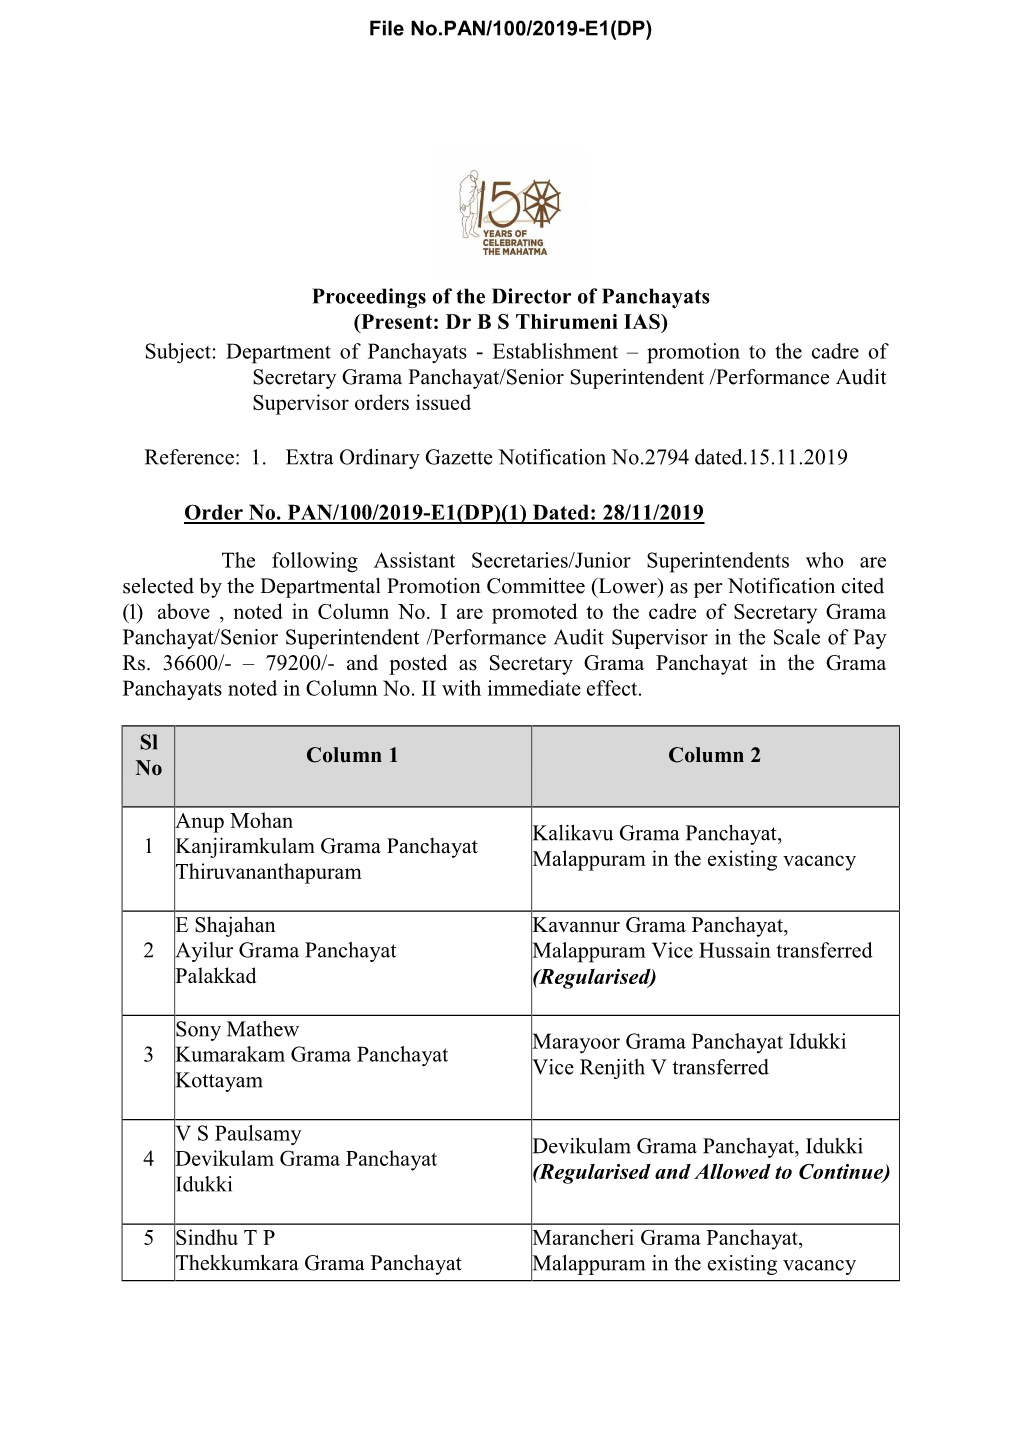 Proceedings of the Director of Panchayats